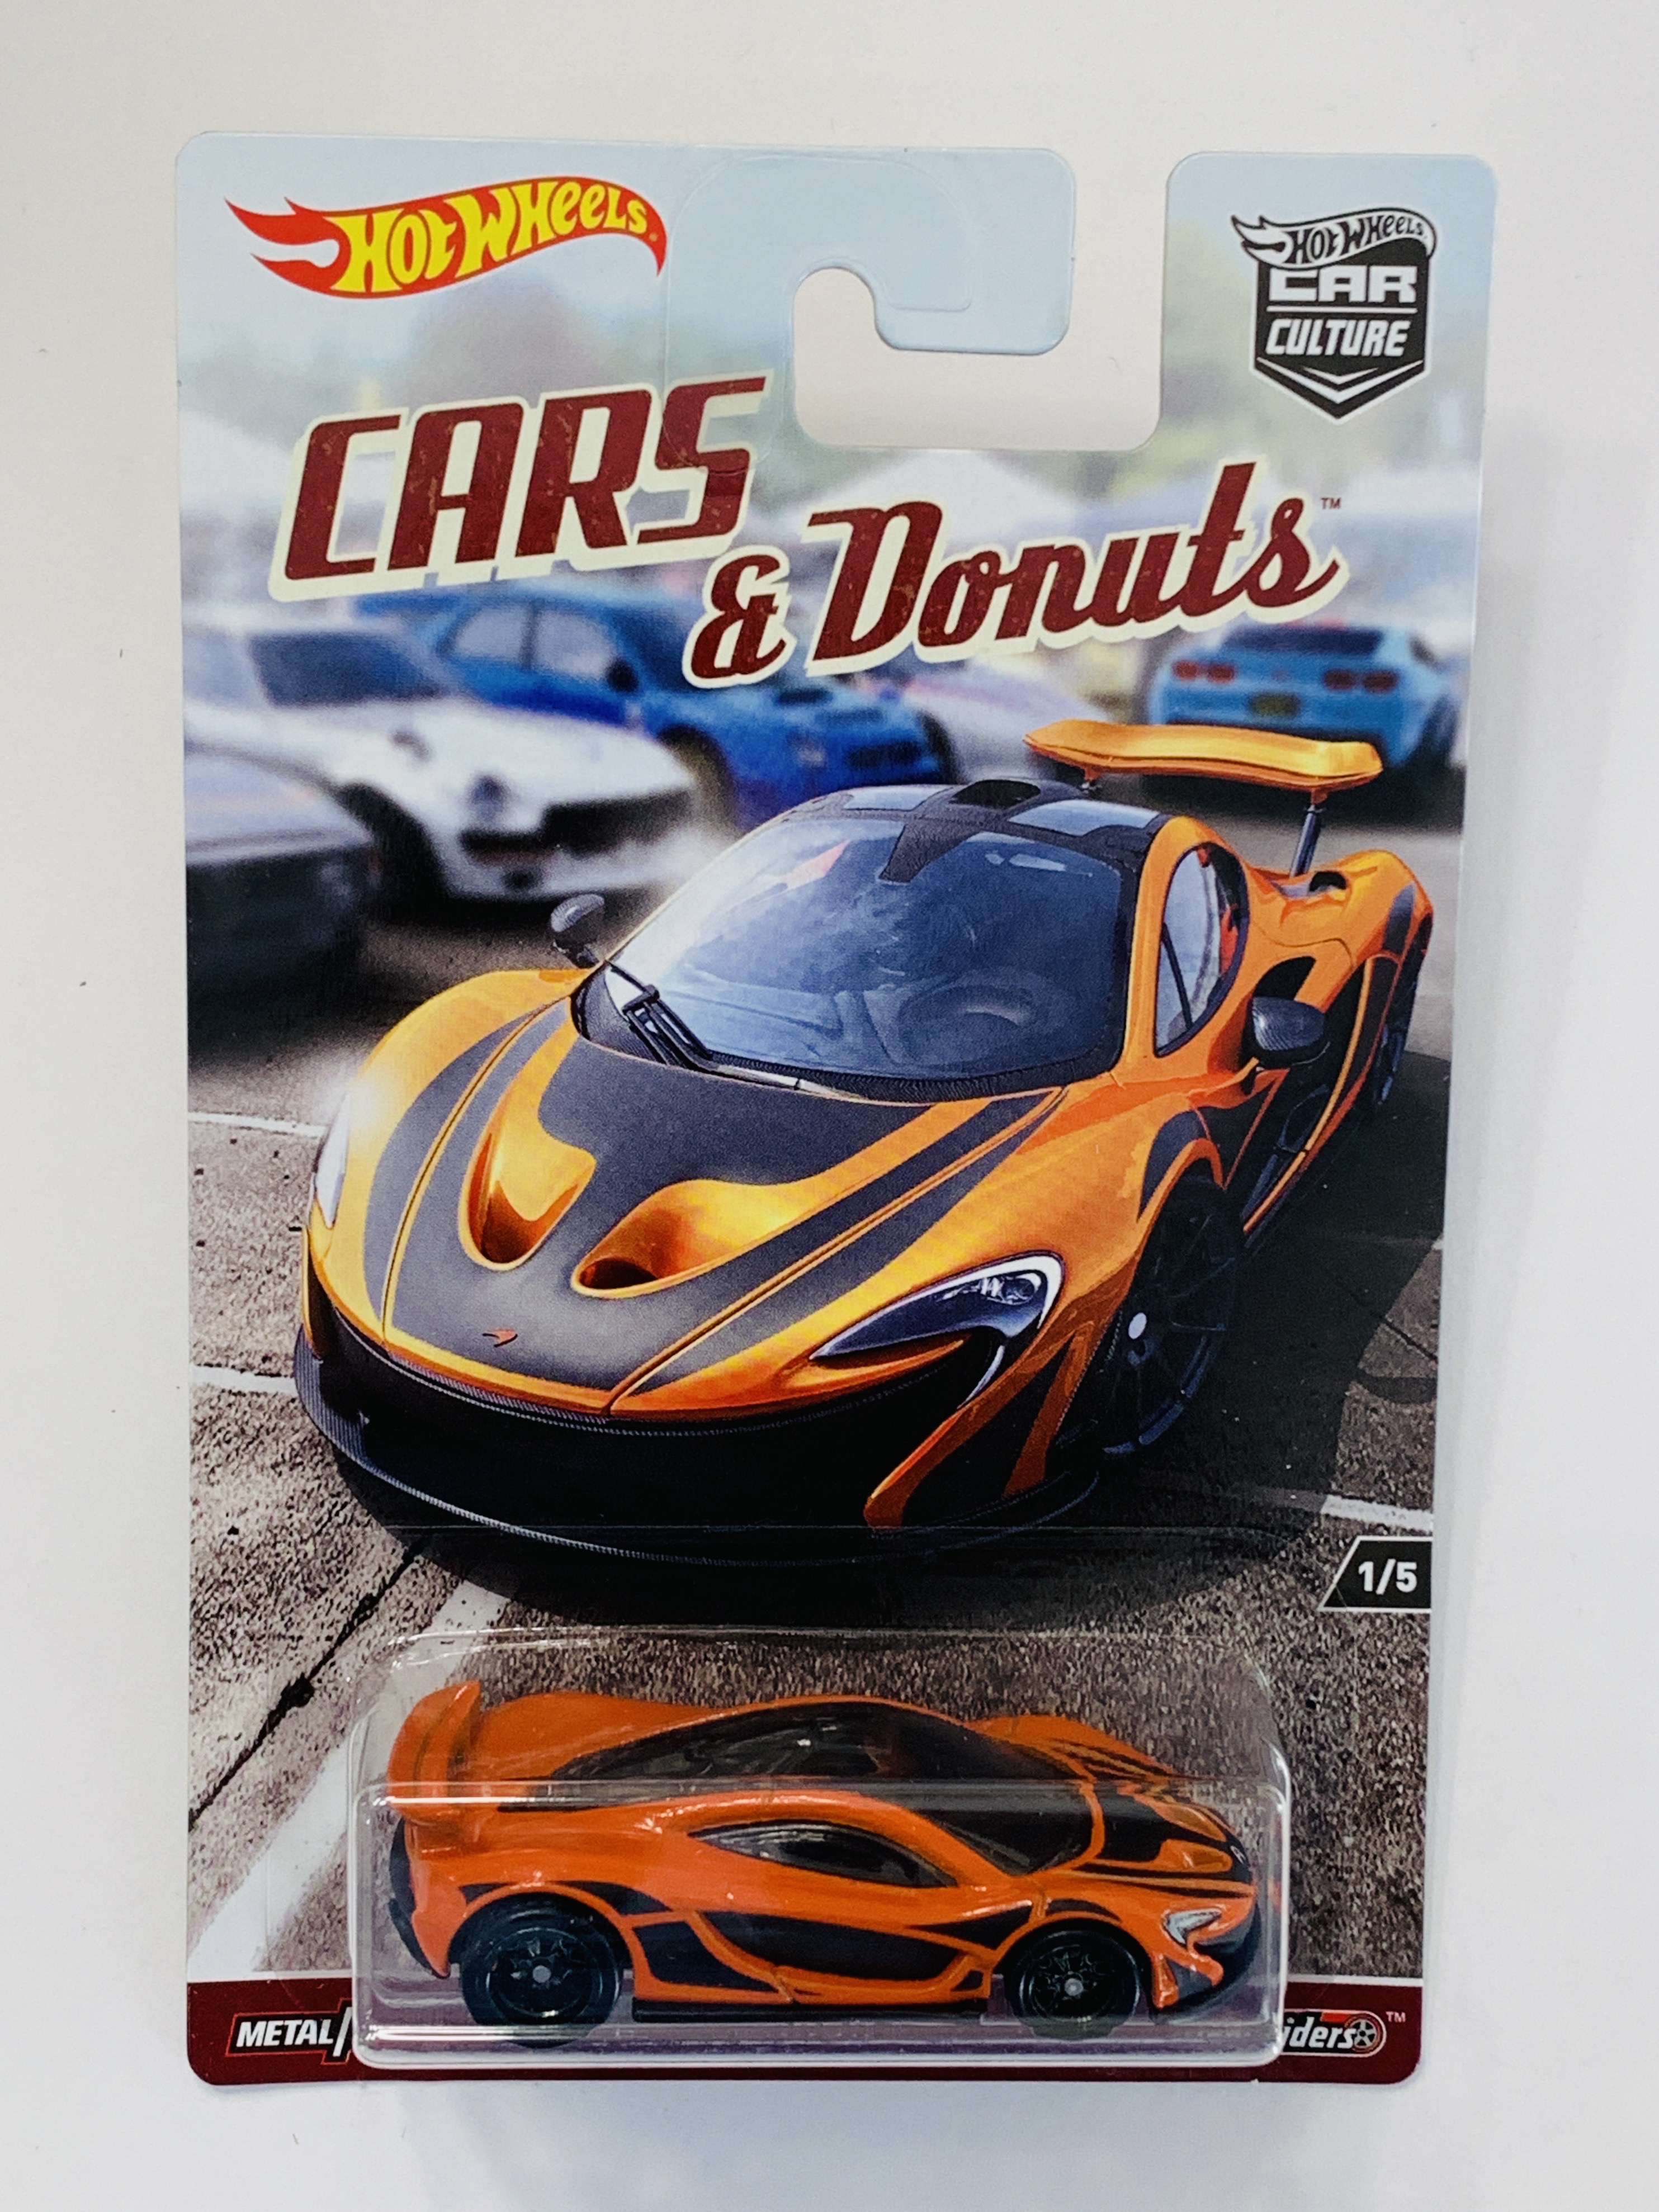 Hot Wheels Car Culture Cars & Donuts McLaren P1